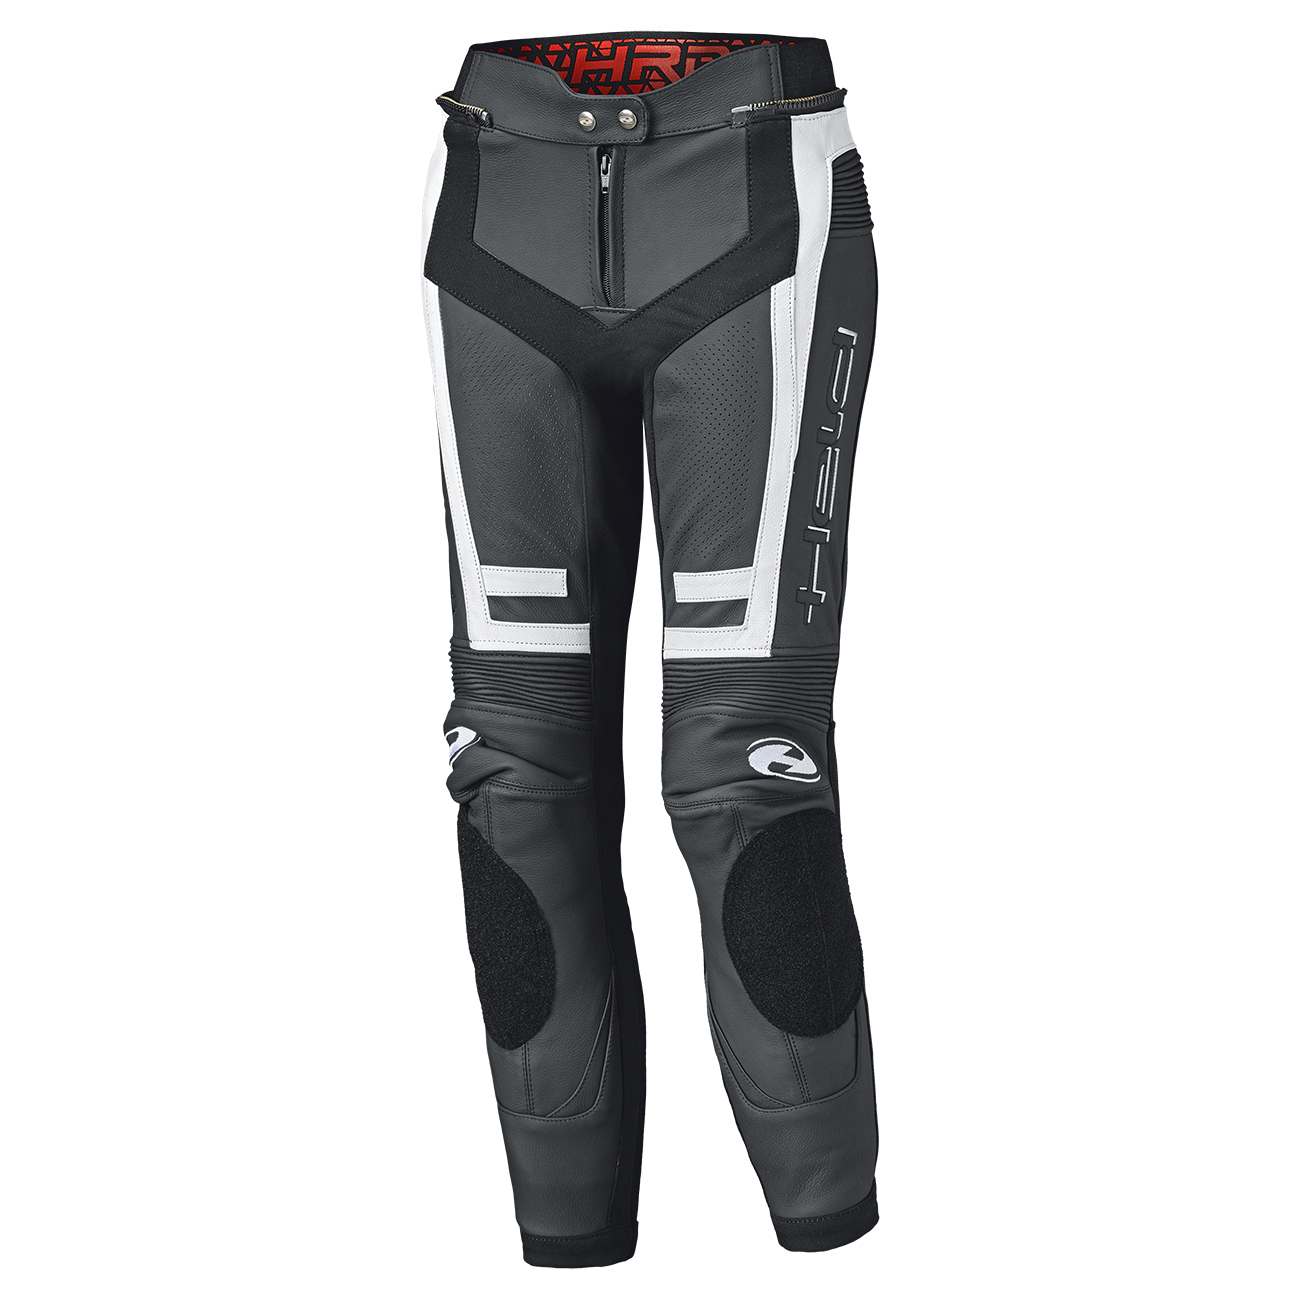 Rocket 3.0 Leather pants